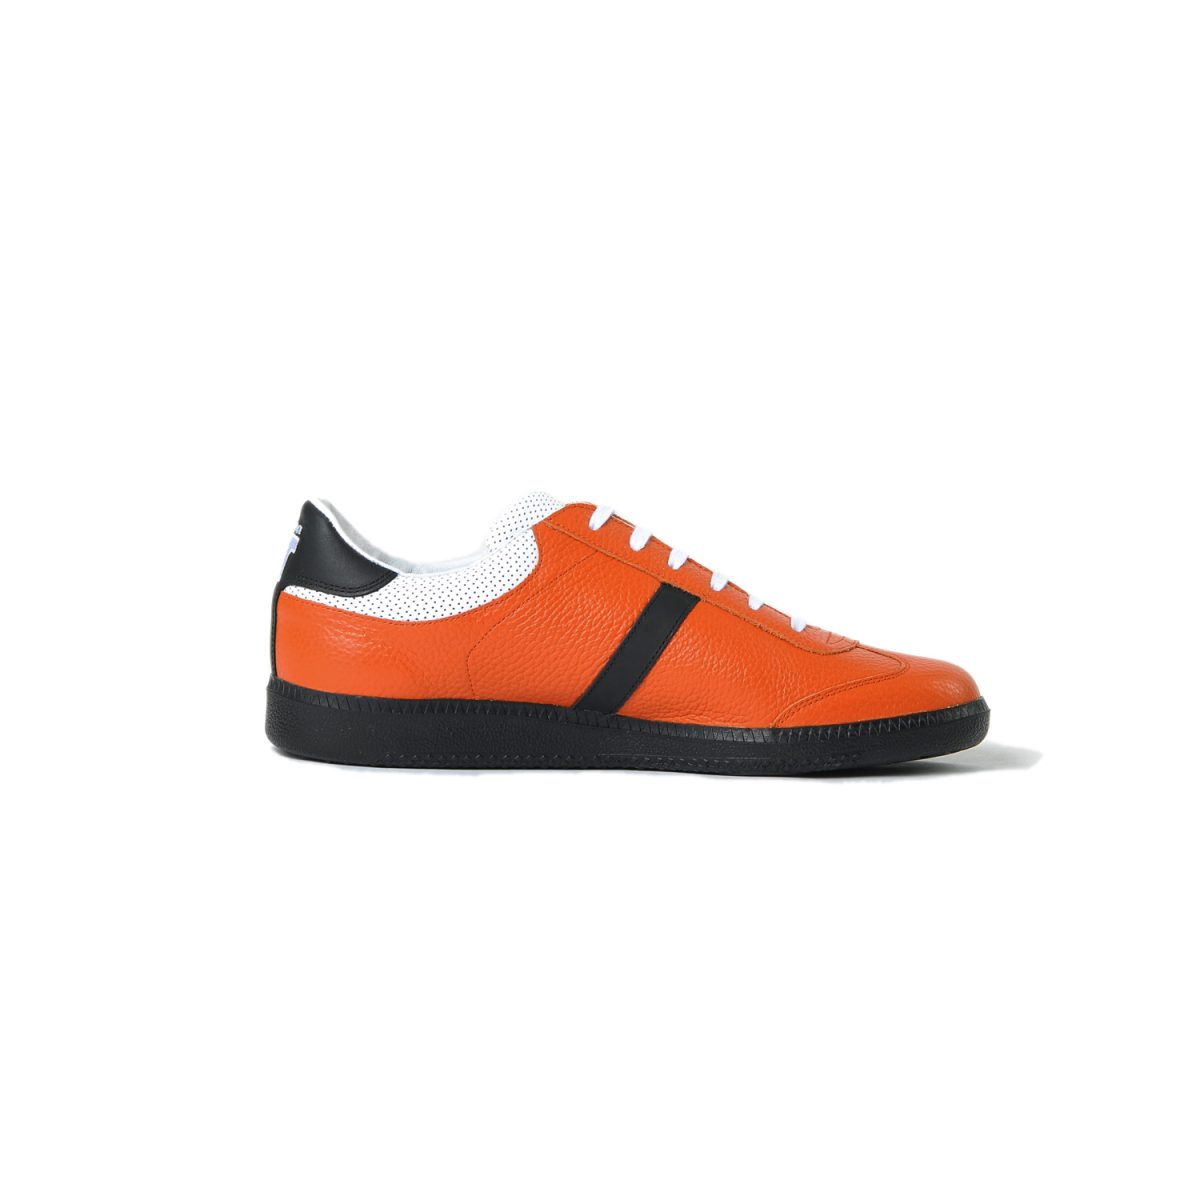 Tisza cipő - Compakt - Narancs-fekete